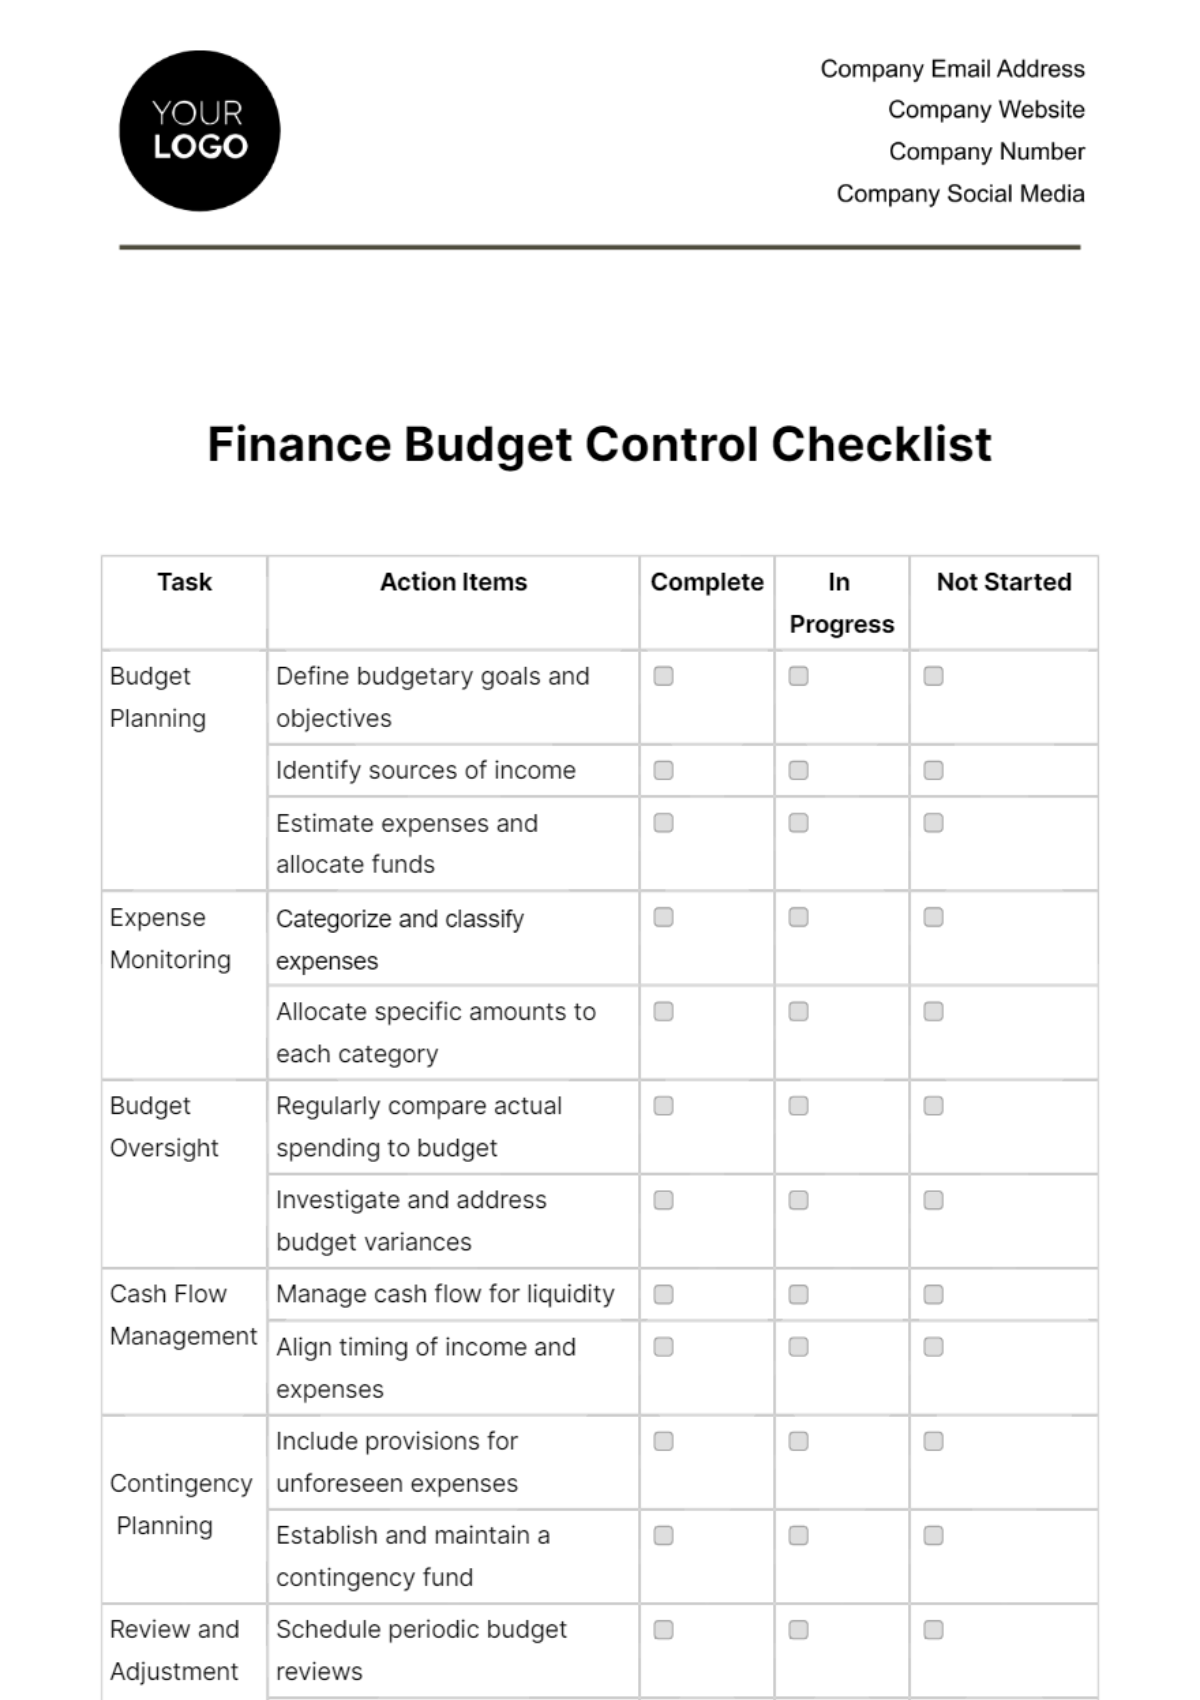 Free Finance Budget Control Checklist Template